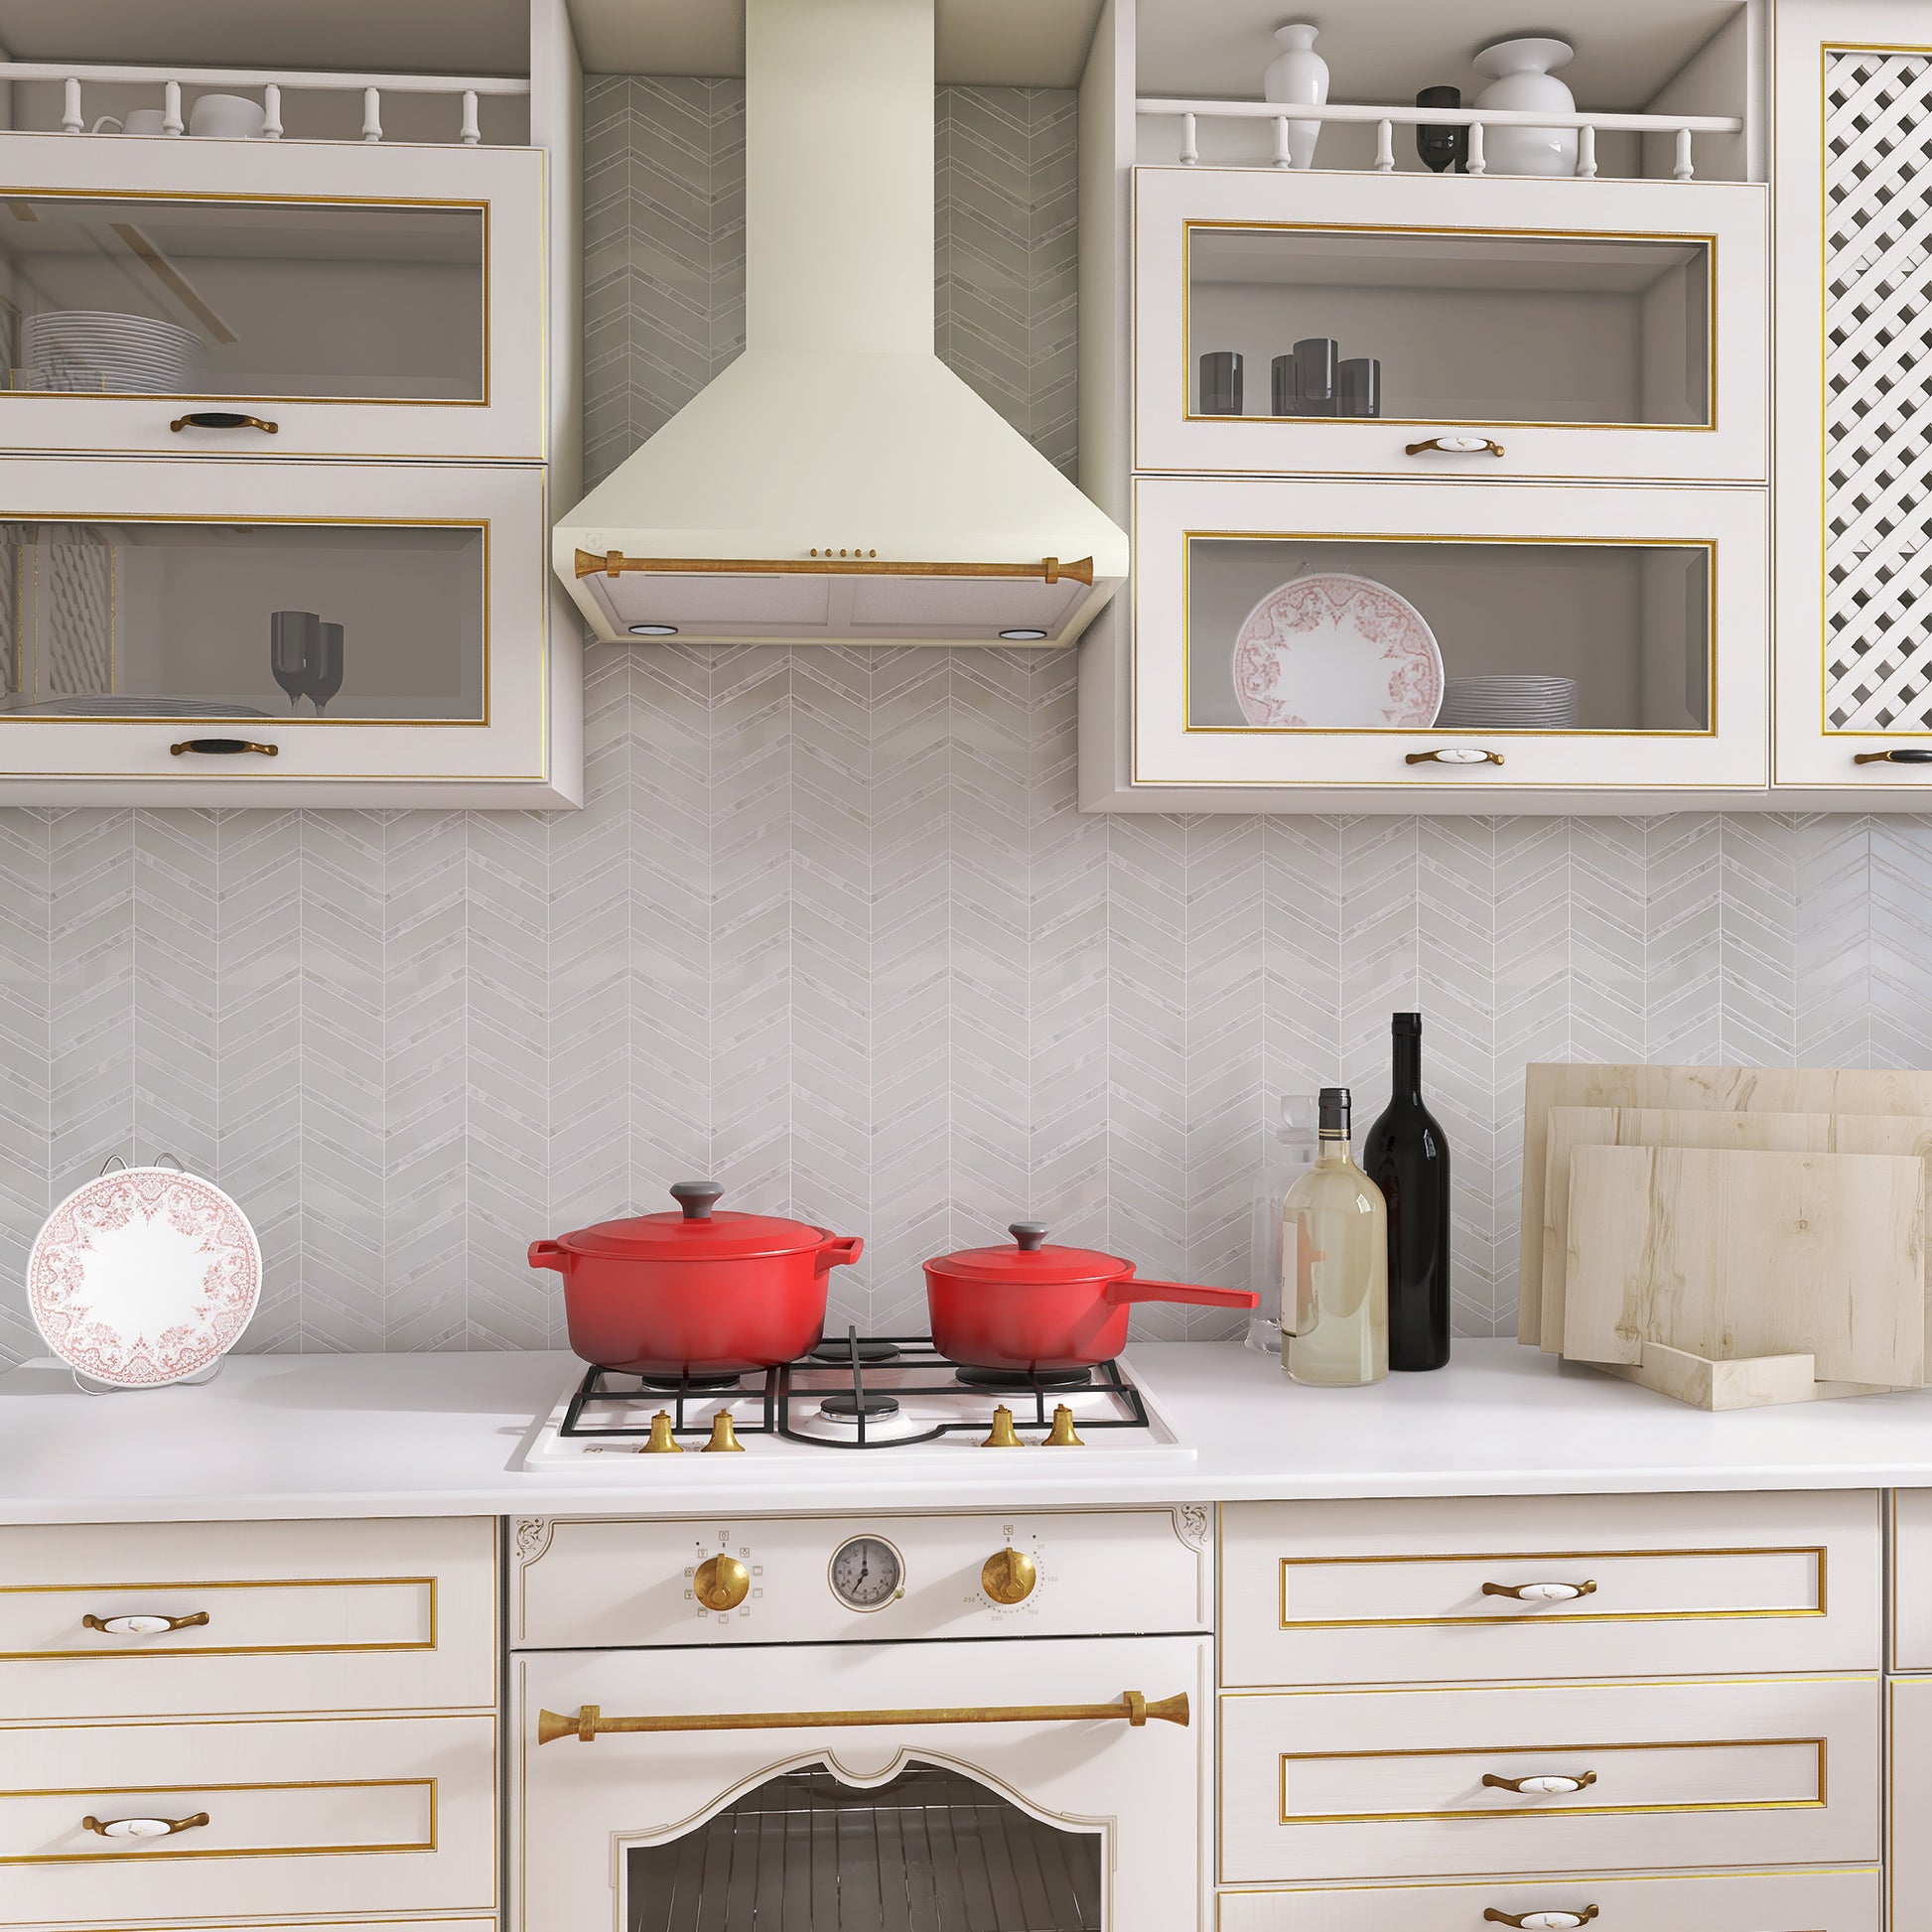 White ceramic kitchen tile